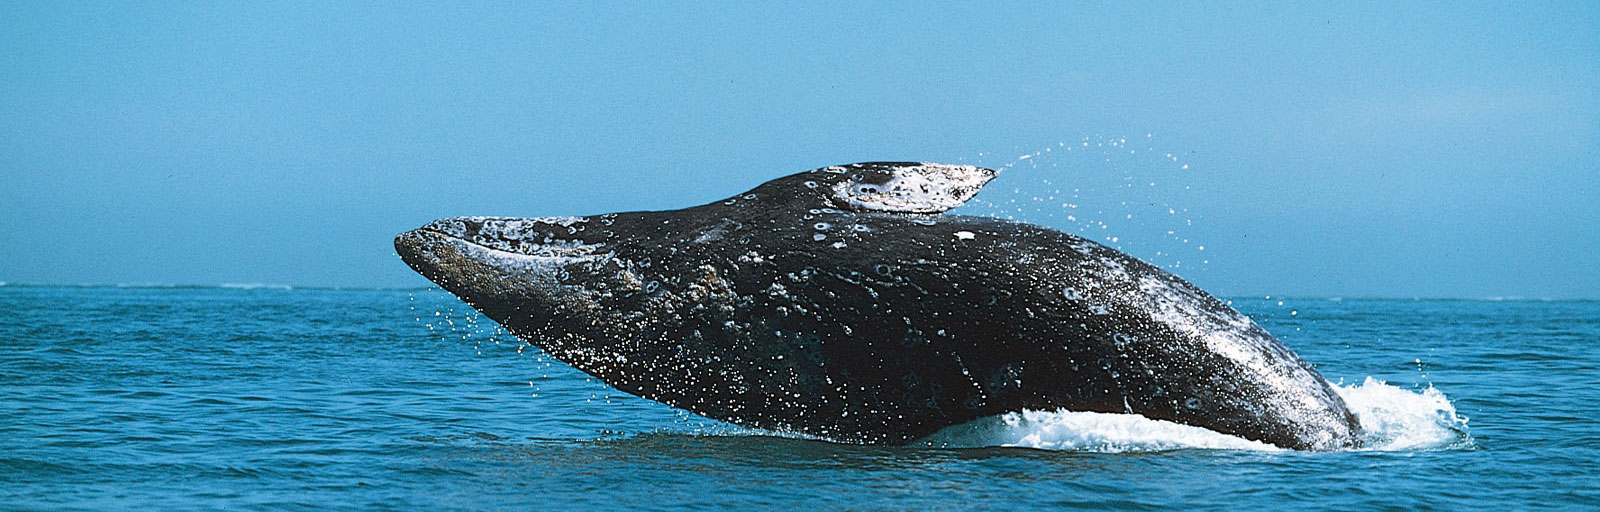 Baja Yoga Retreats in Mexico: Whale Watching 